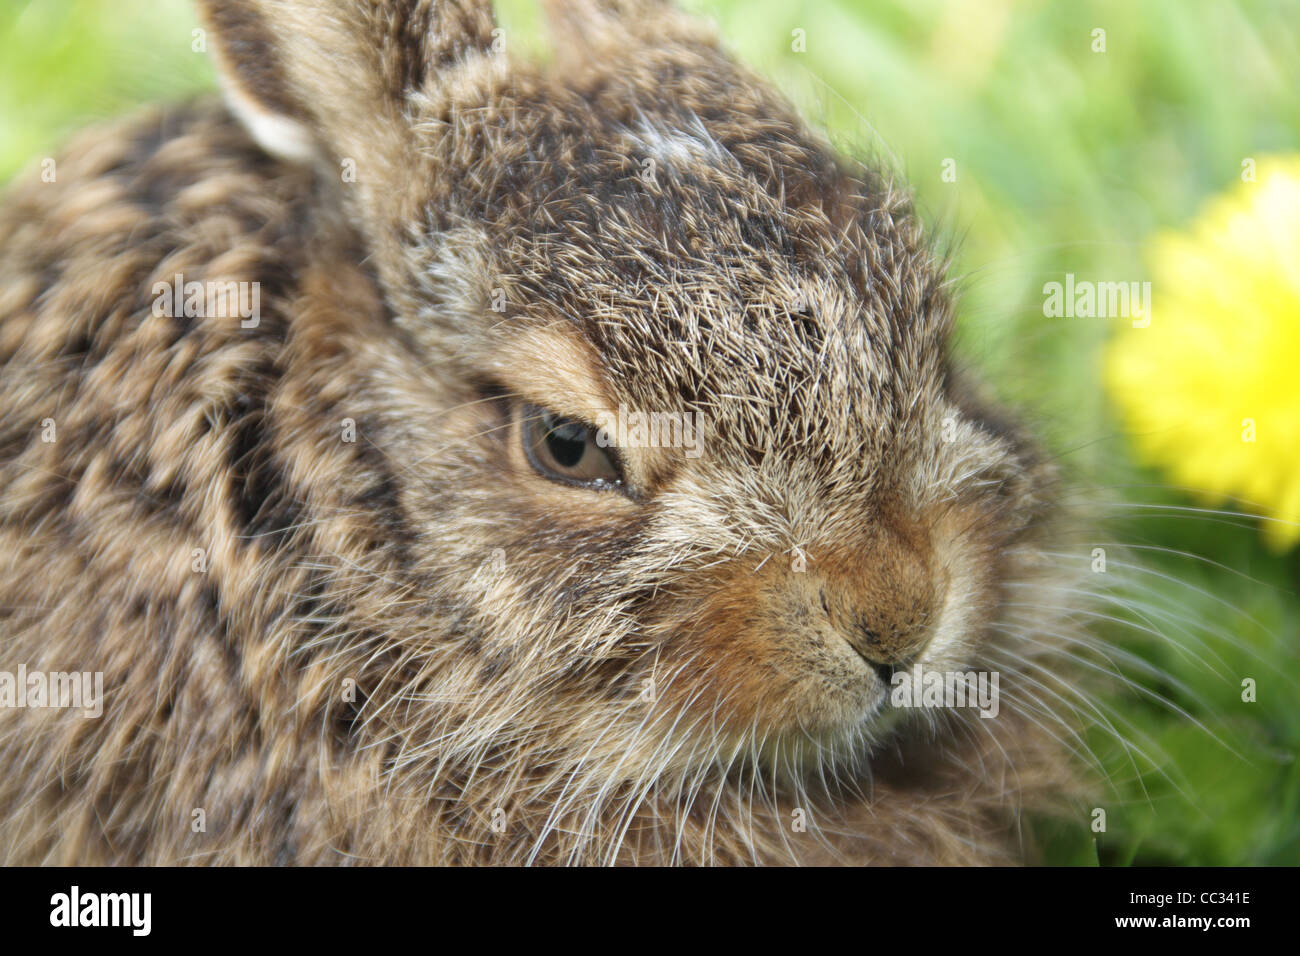 Little hare portrait, shot macro shallow depth of field Stock Photo